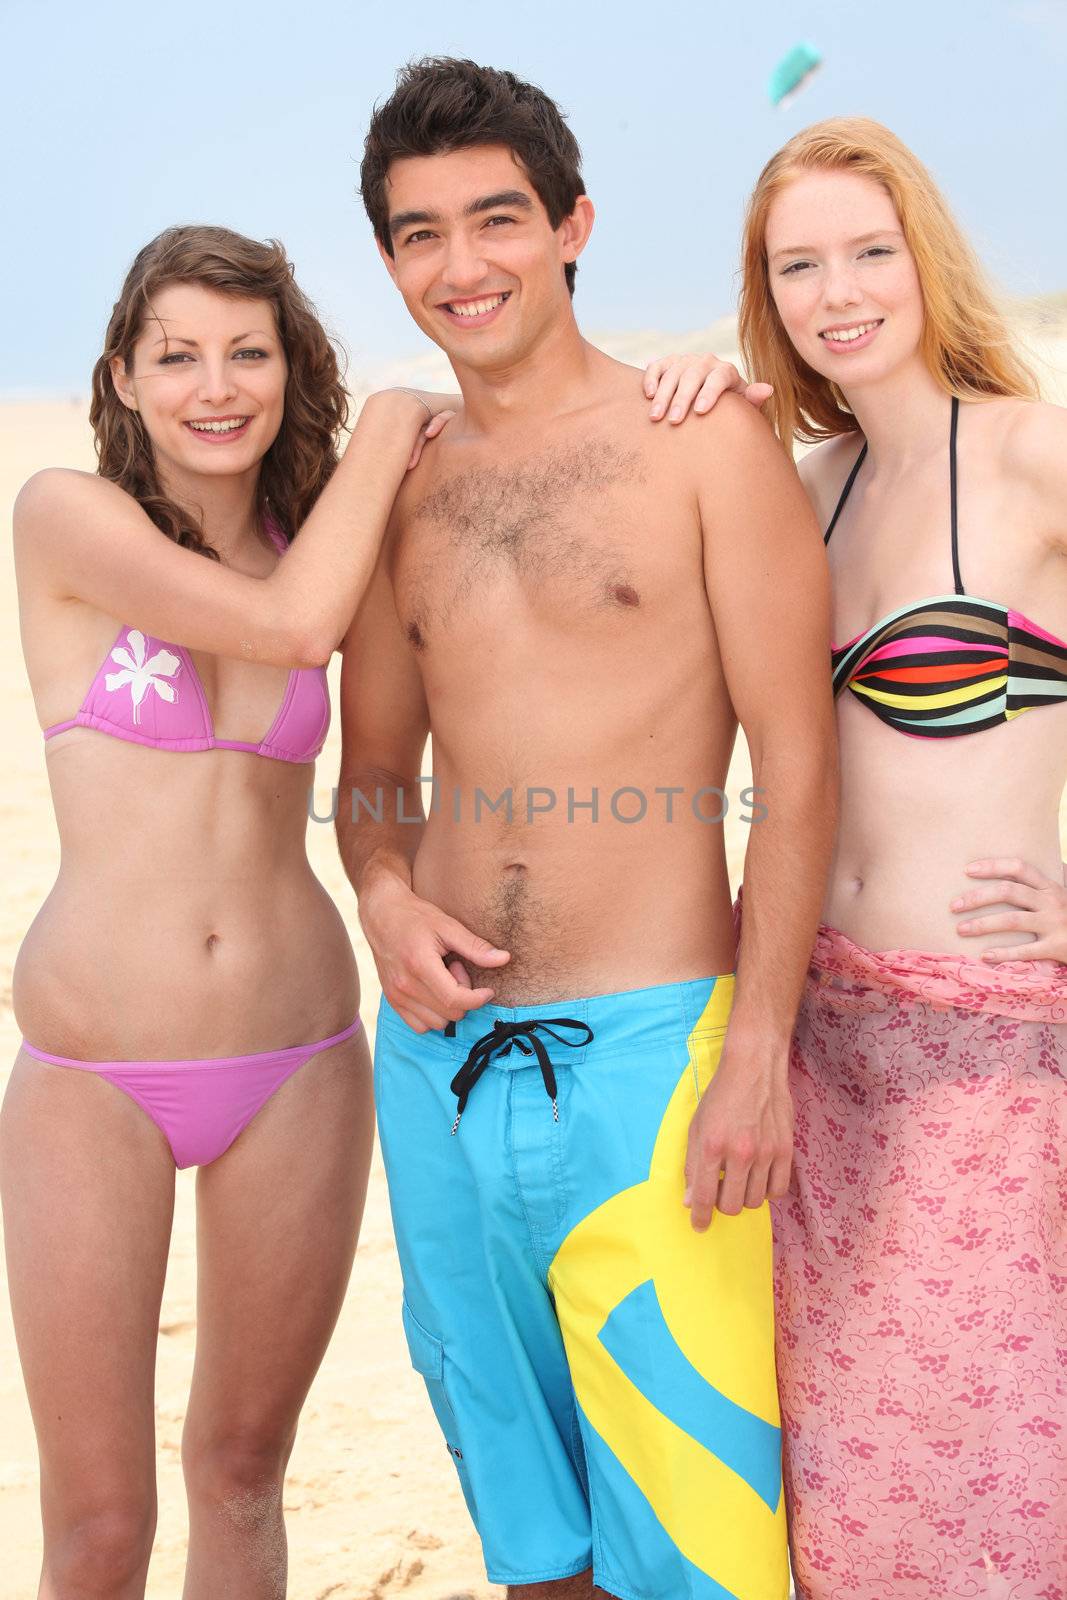 Three friends stood on a beach